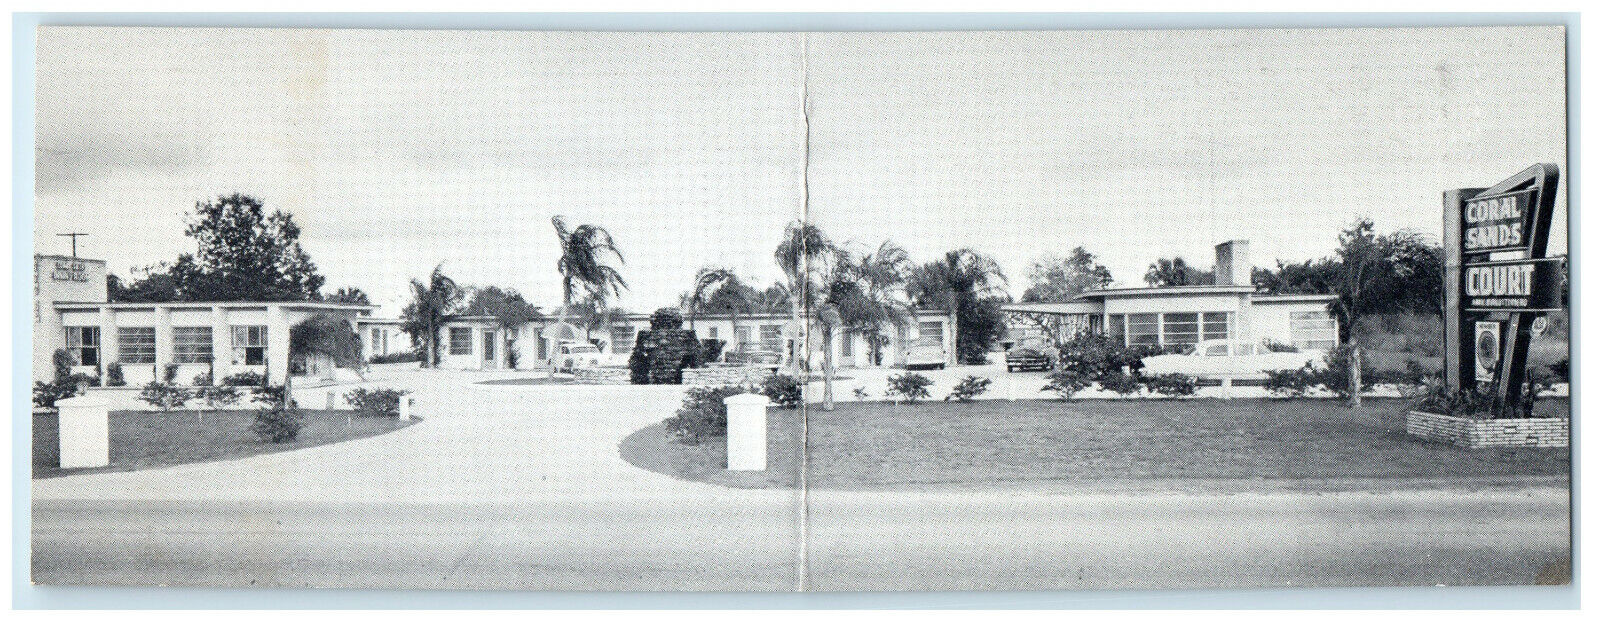 c1960s Coral Sands, Post Box Office 504, Cocoa Florida FL Vintage Postcard